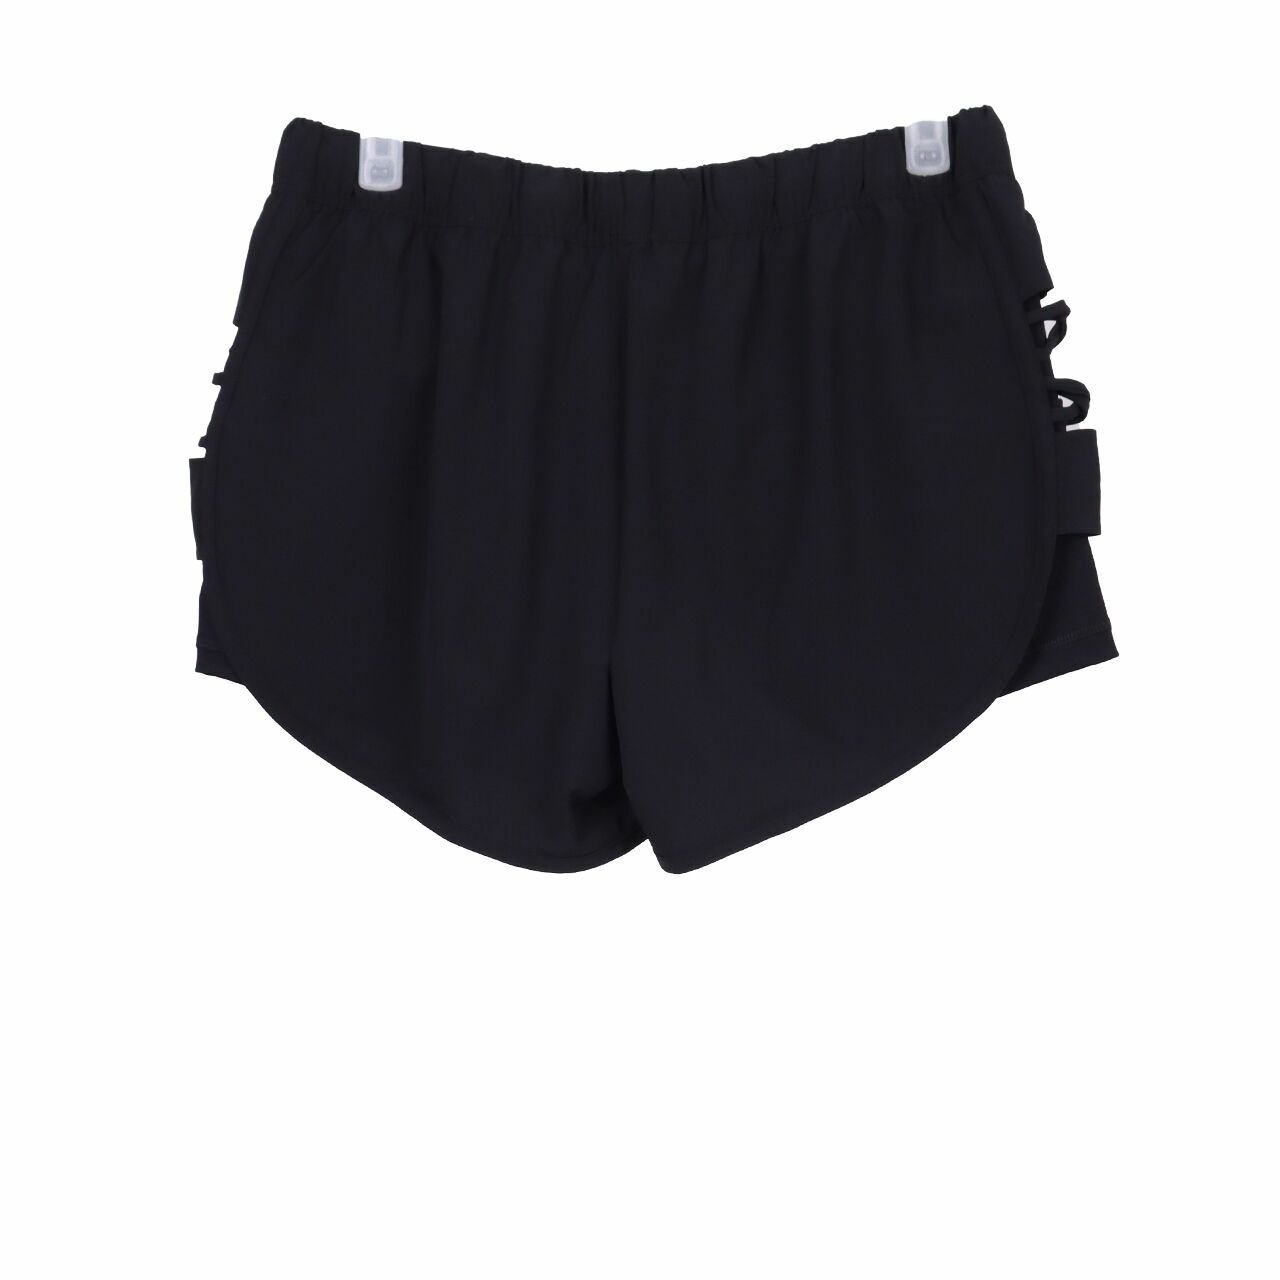 Wakingbee Black Shorts